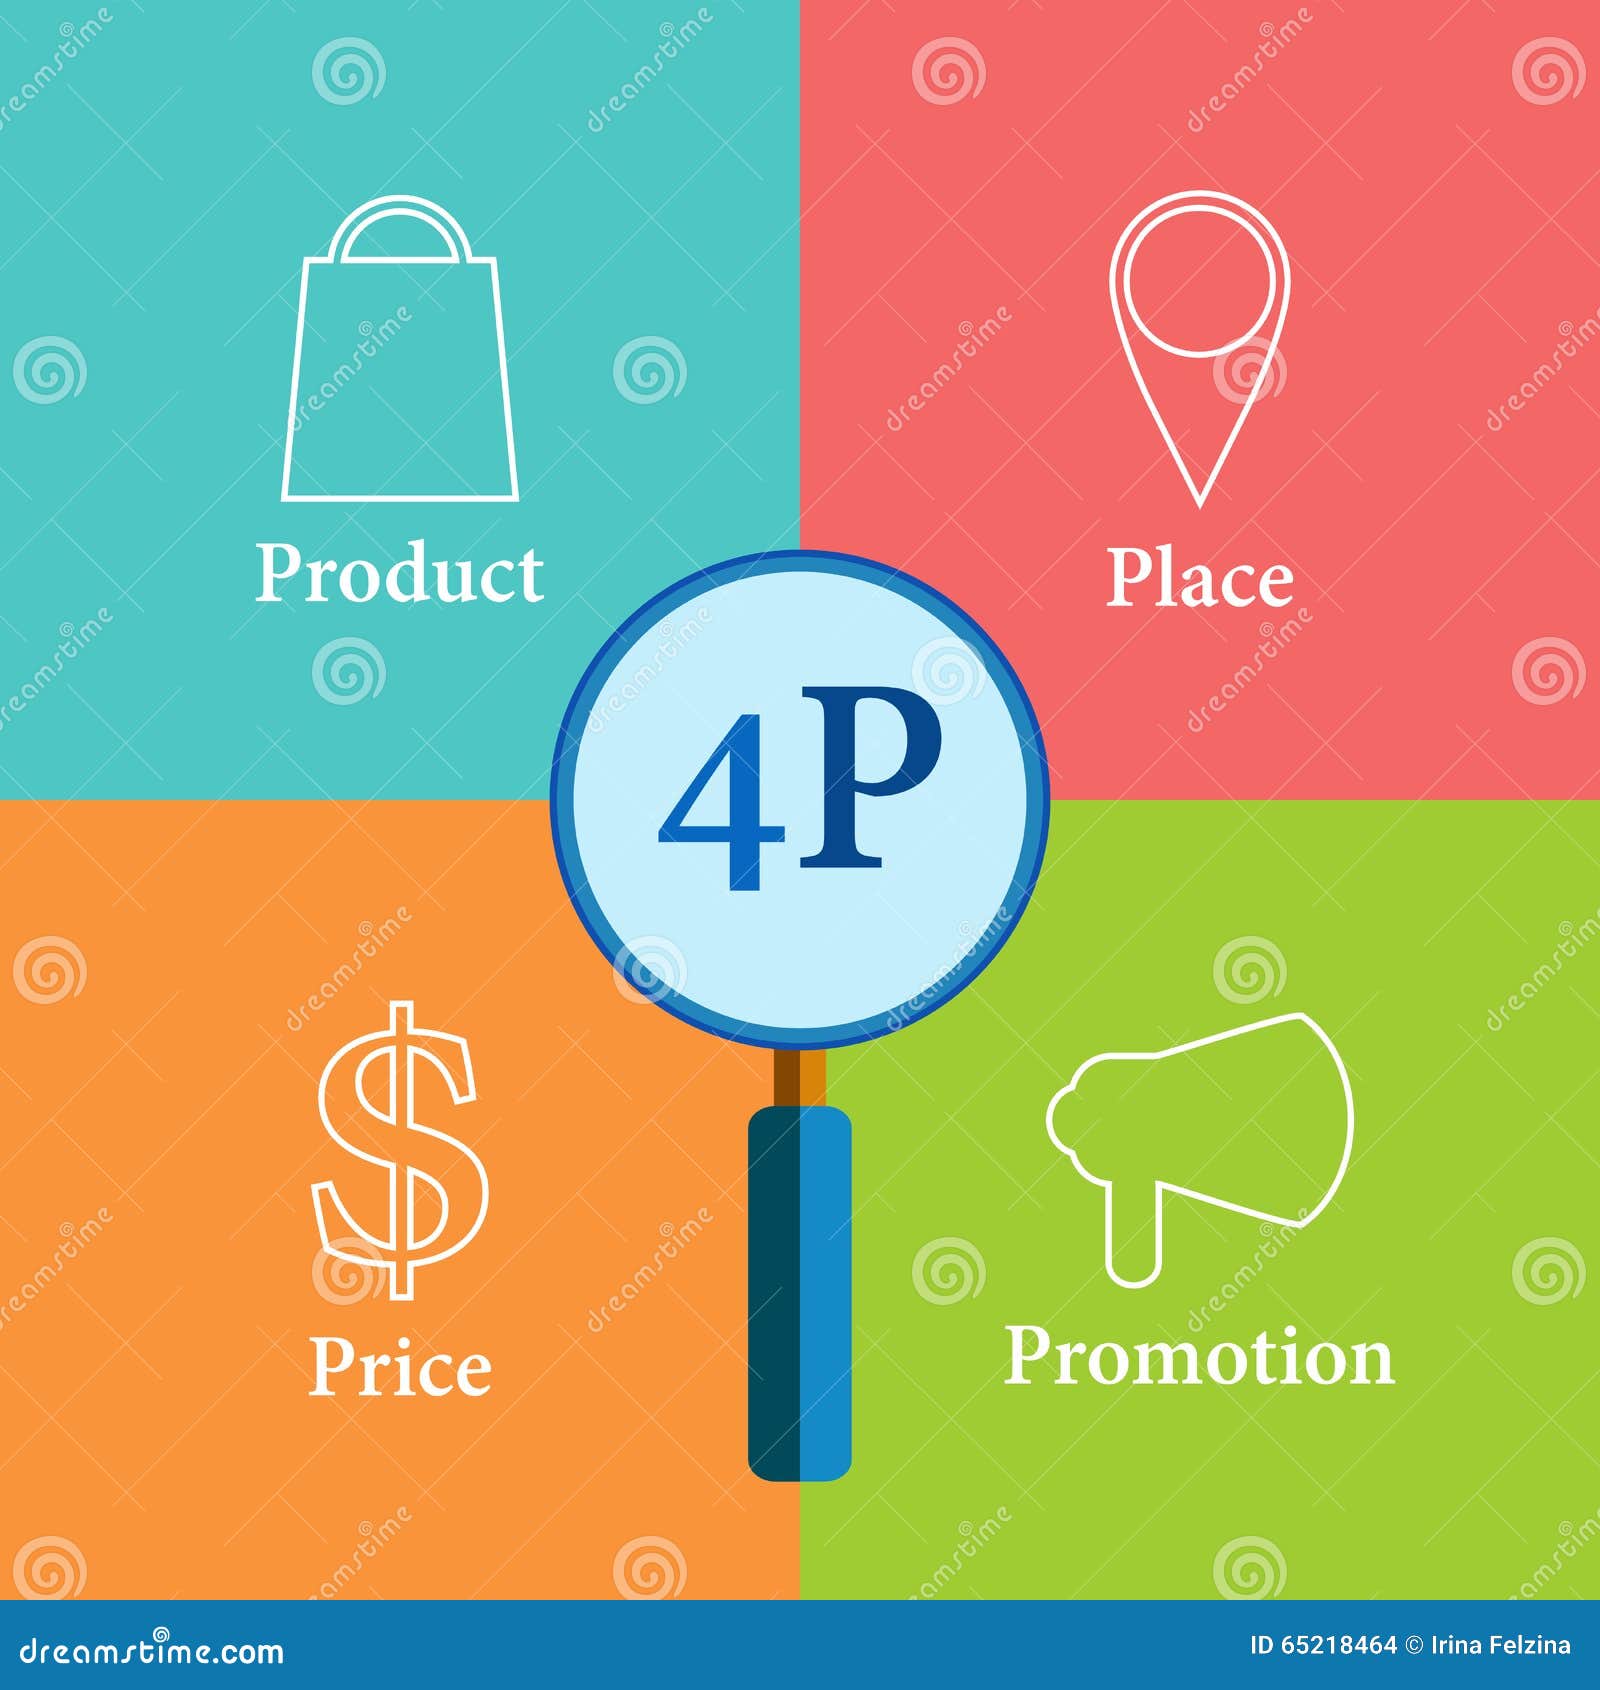 Marketing scheme 4P stock vector. Illustration of colorful ...